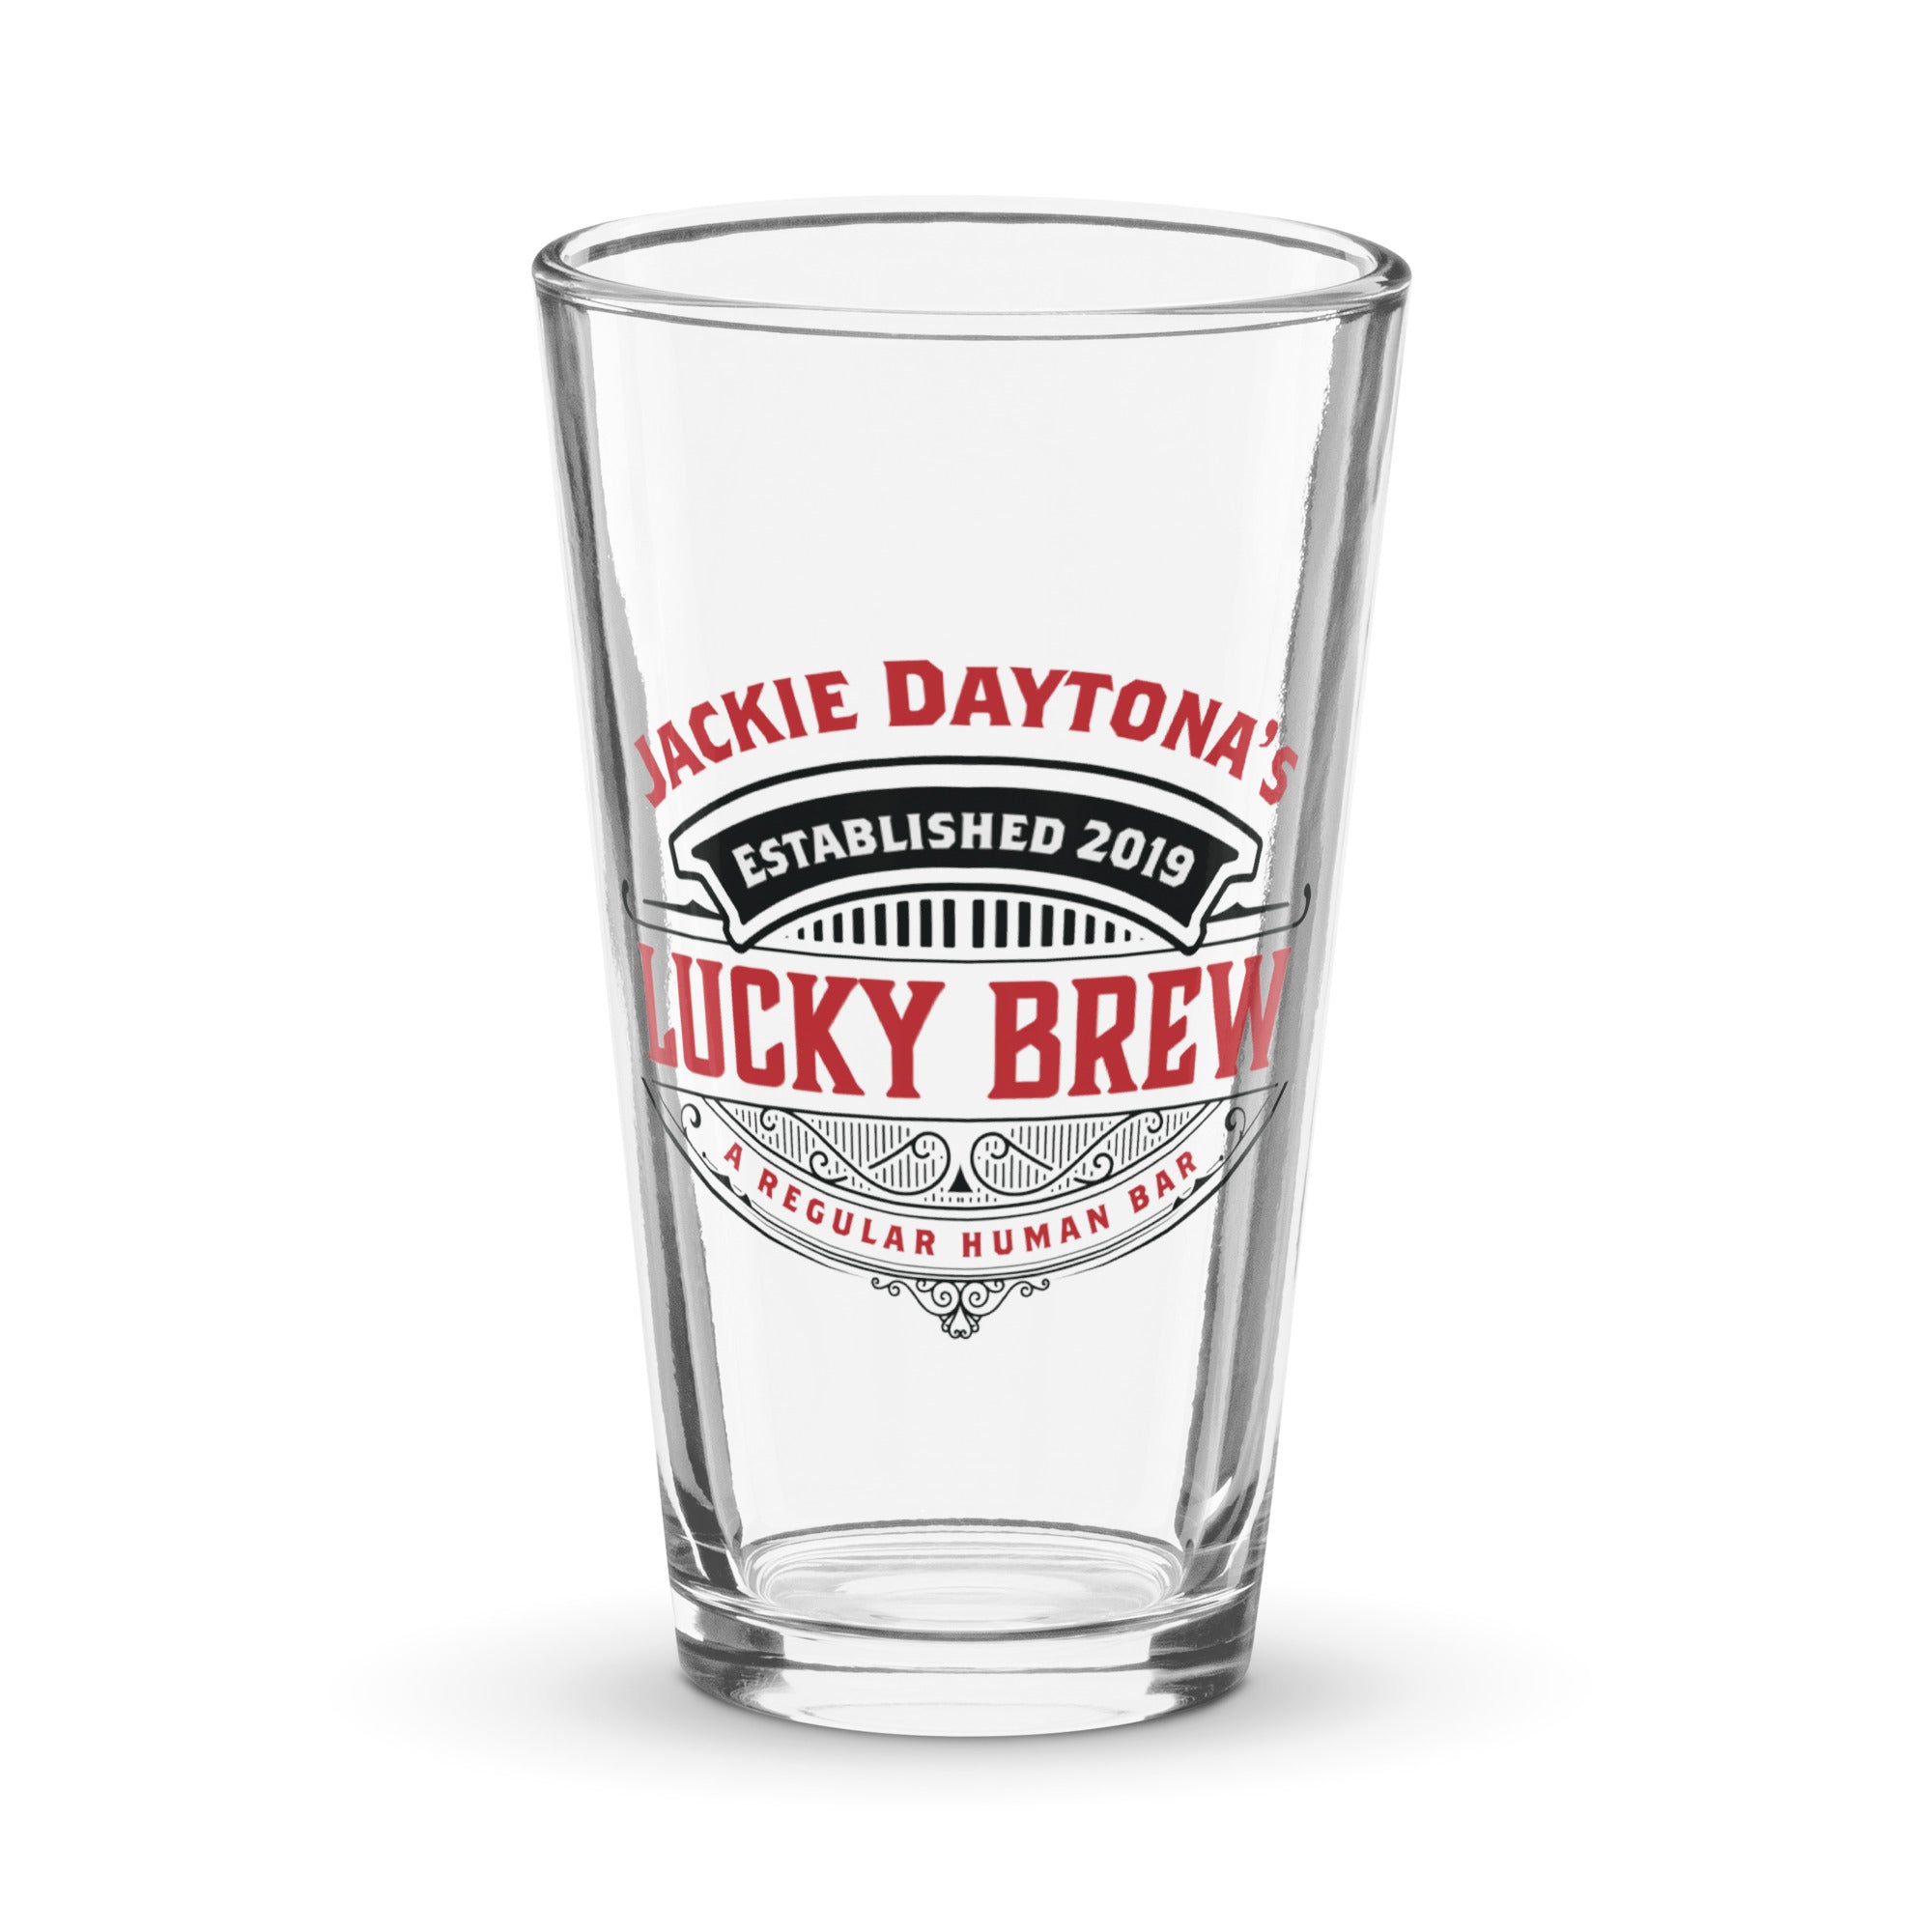 Jackie Daytona's Bar Shaker pint glass